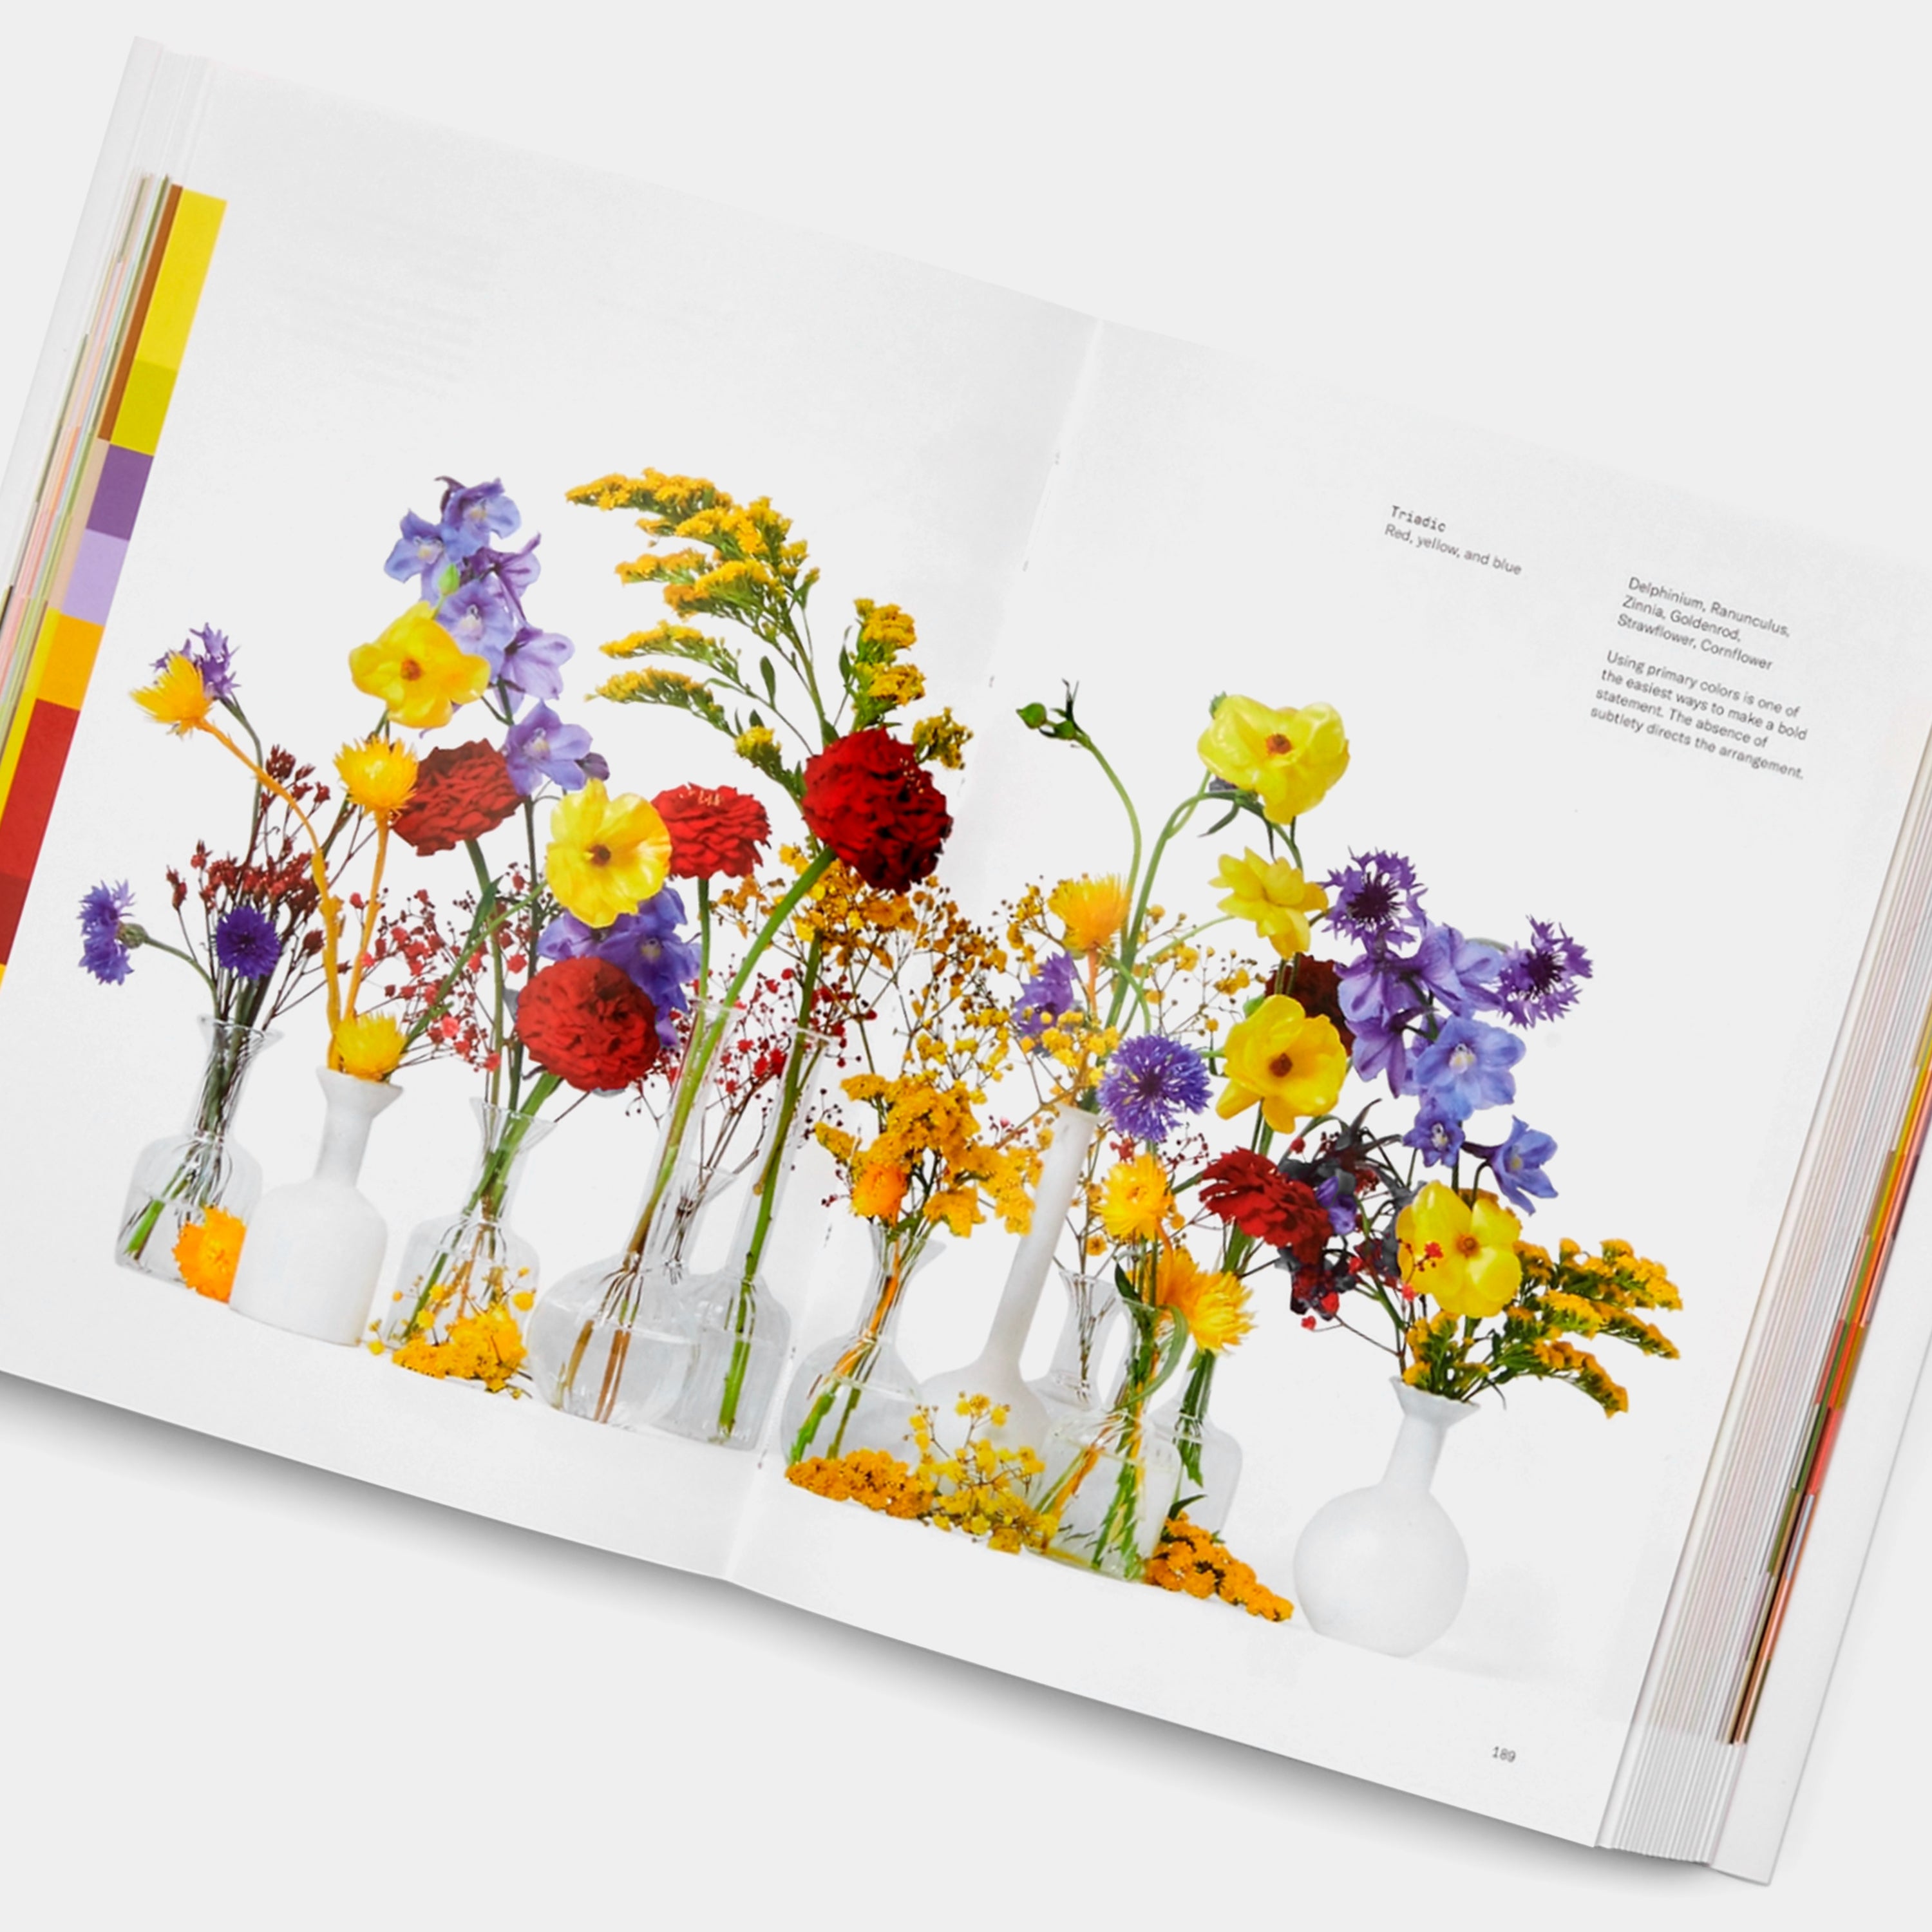 Empty Vase - Flower Color Theory by Darroch Putnam - Same Day